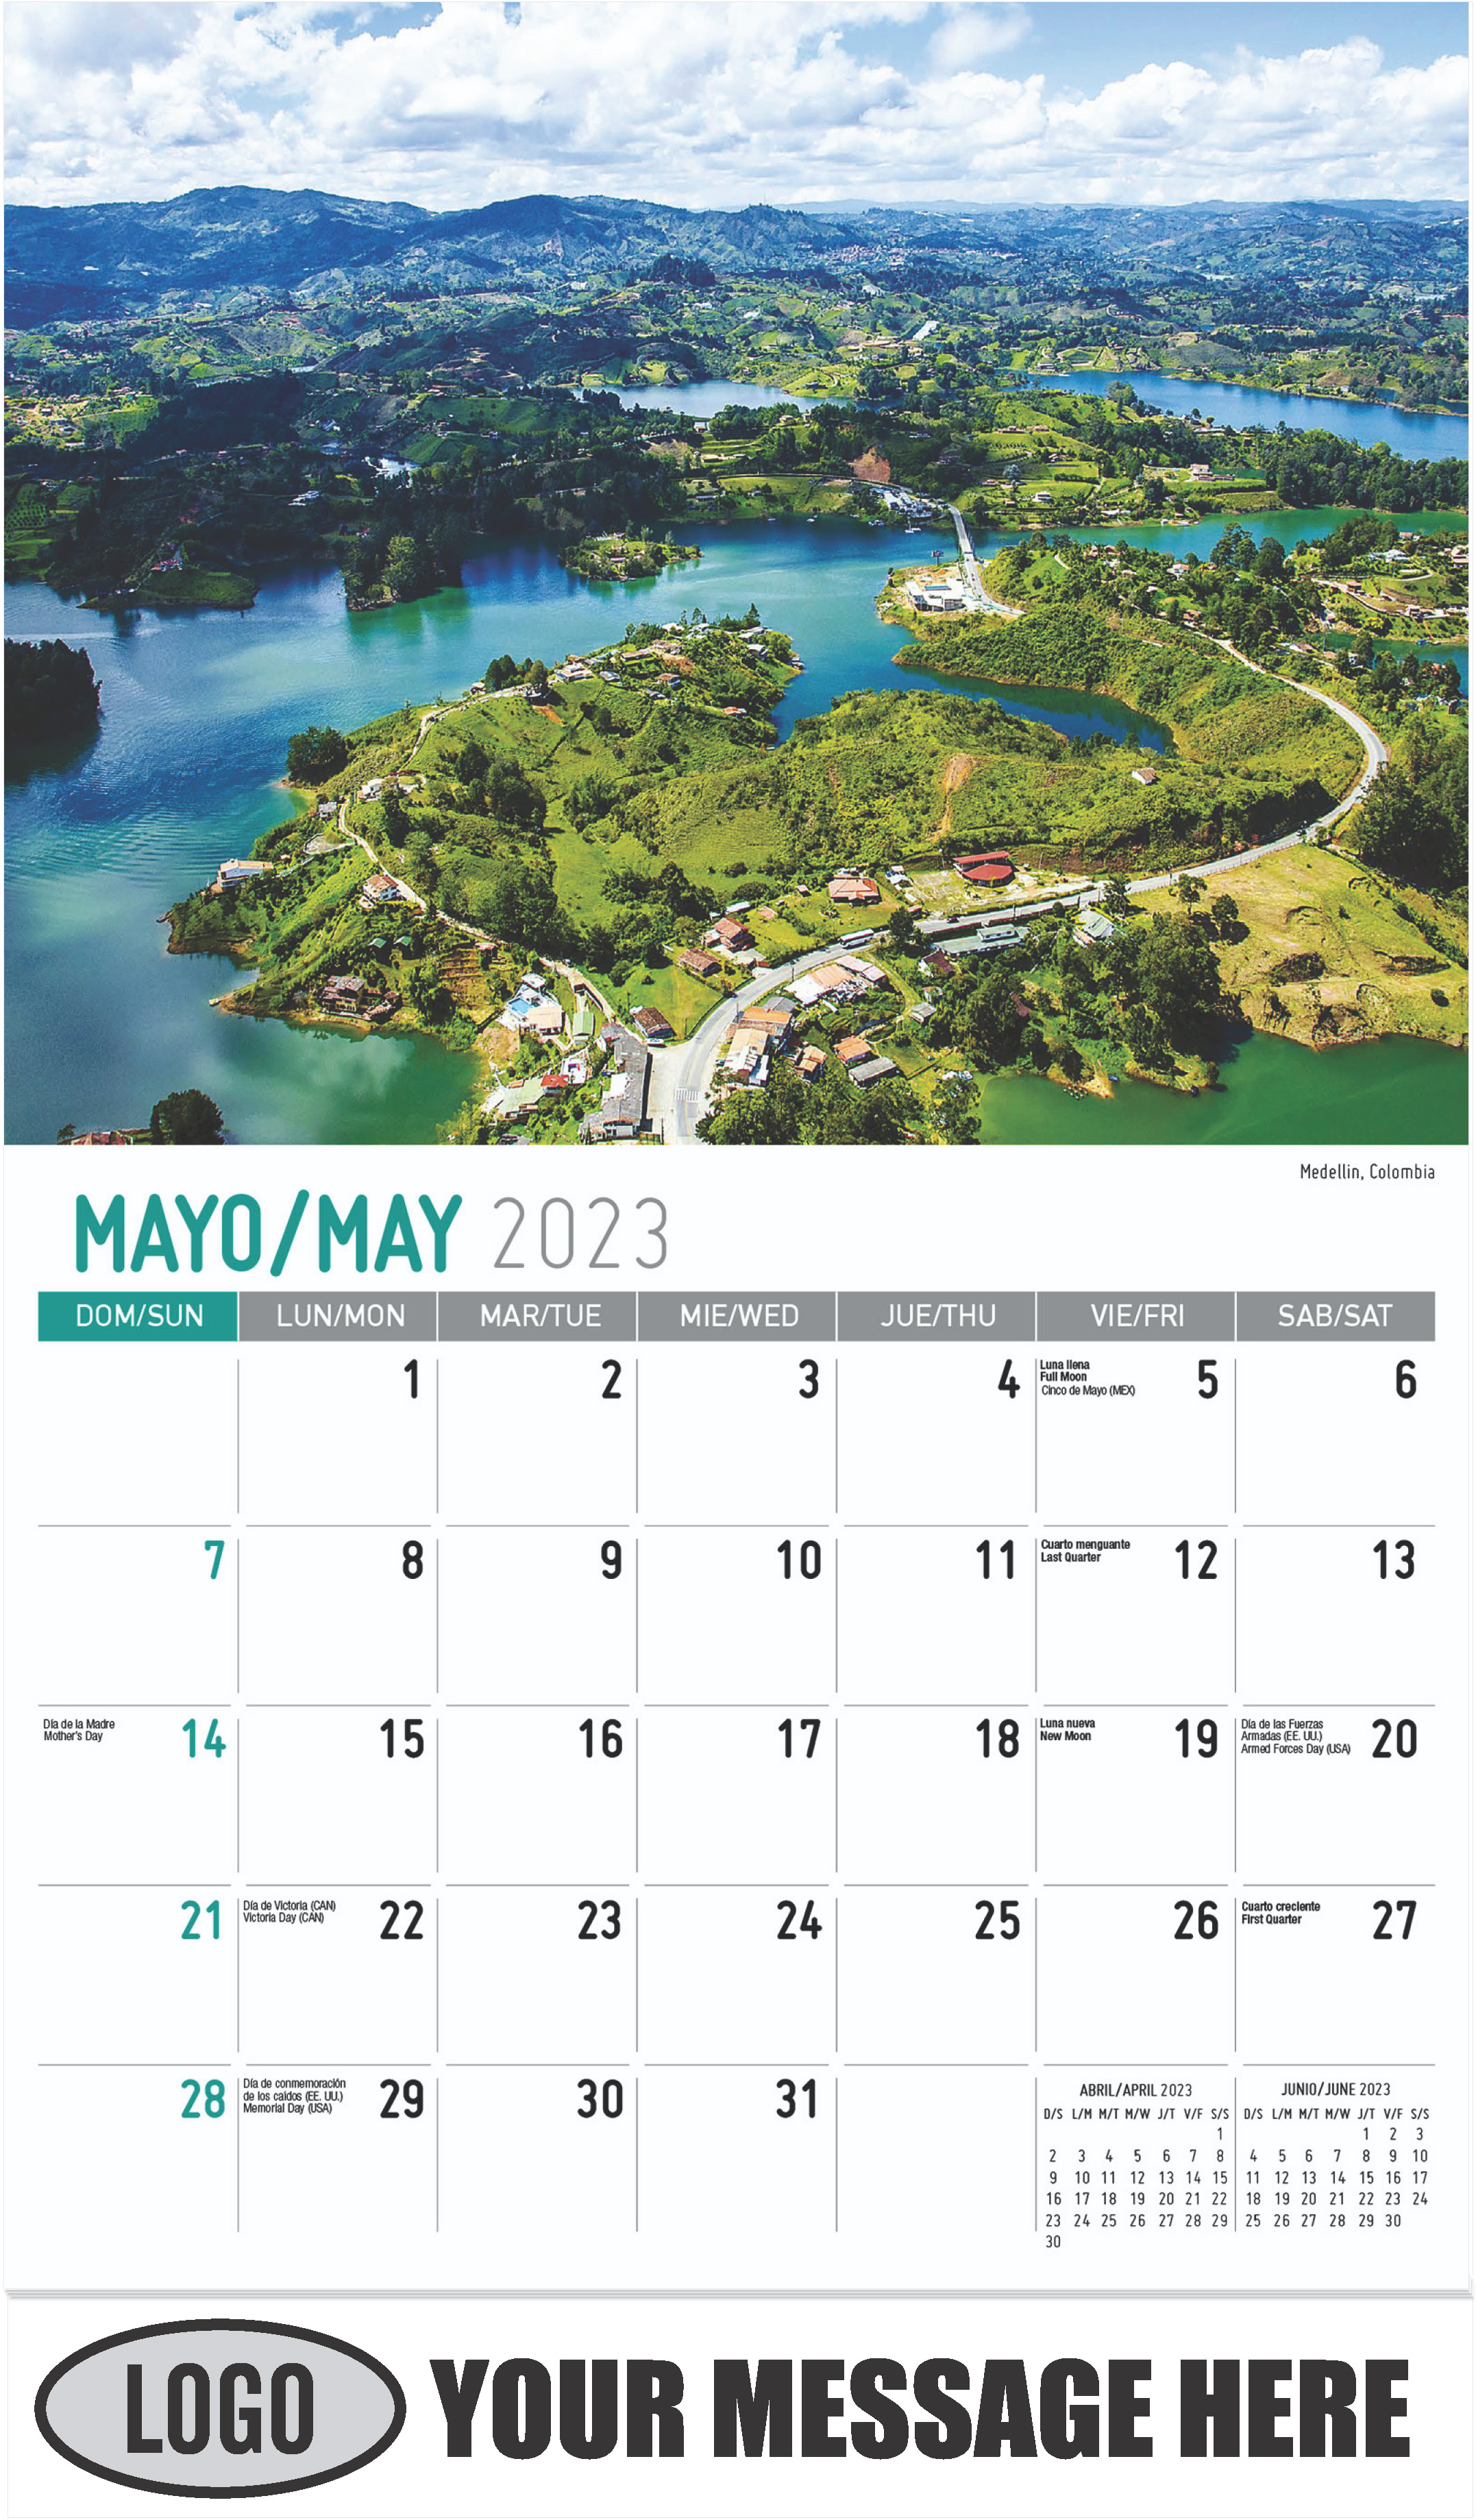 Old San Juan, Puerto Rico - May - Beauty of Latin America 2023 Promotional Calendar